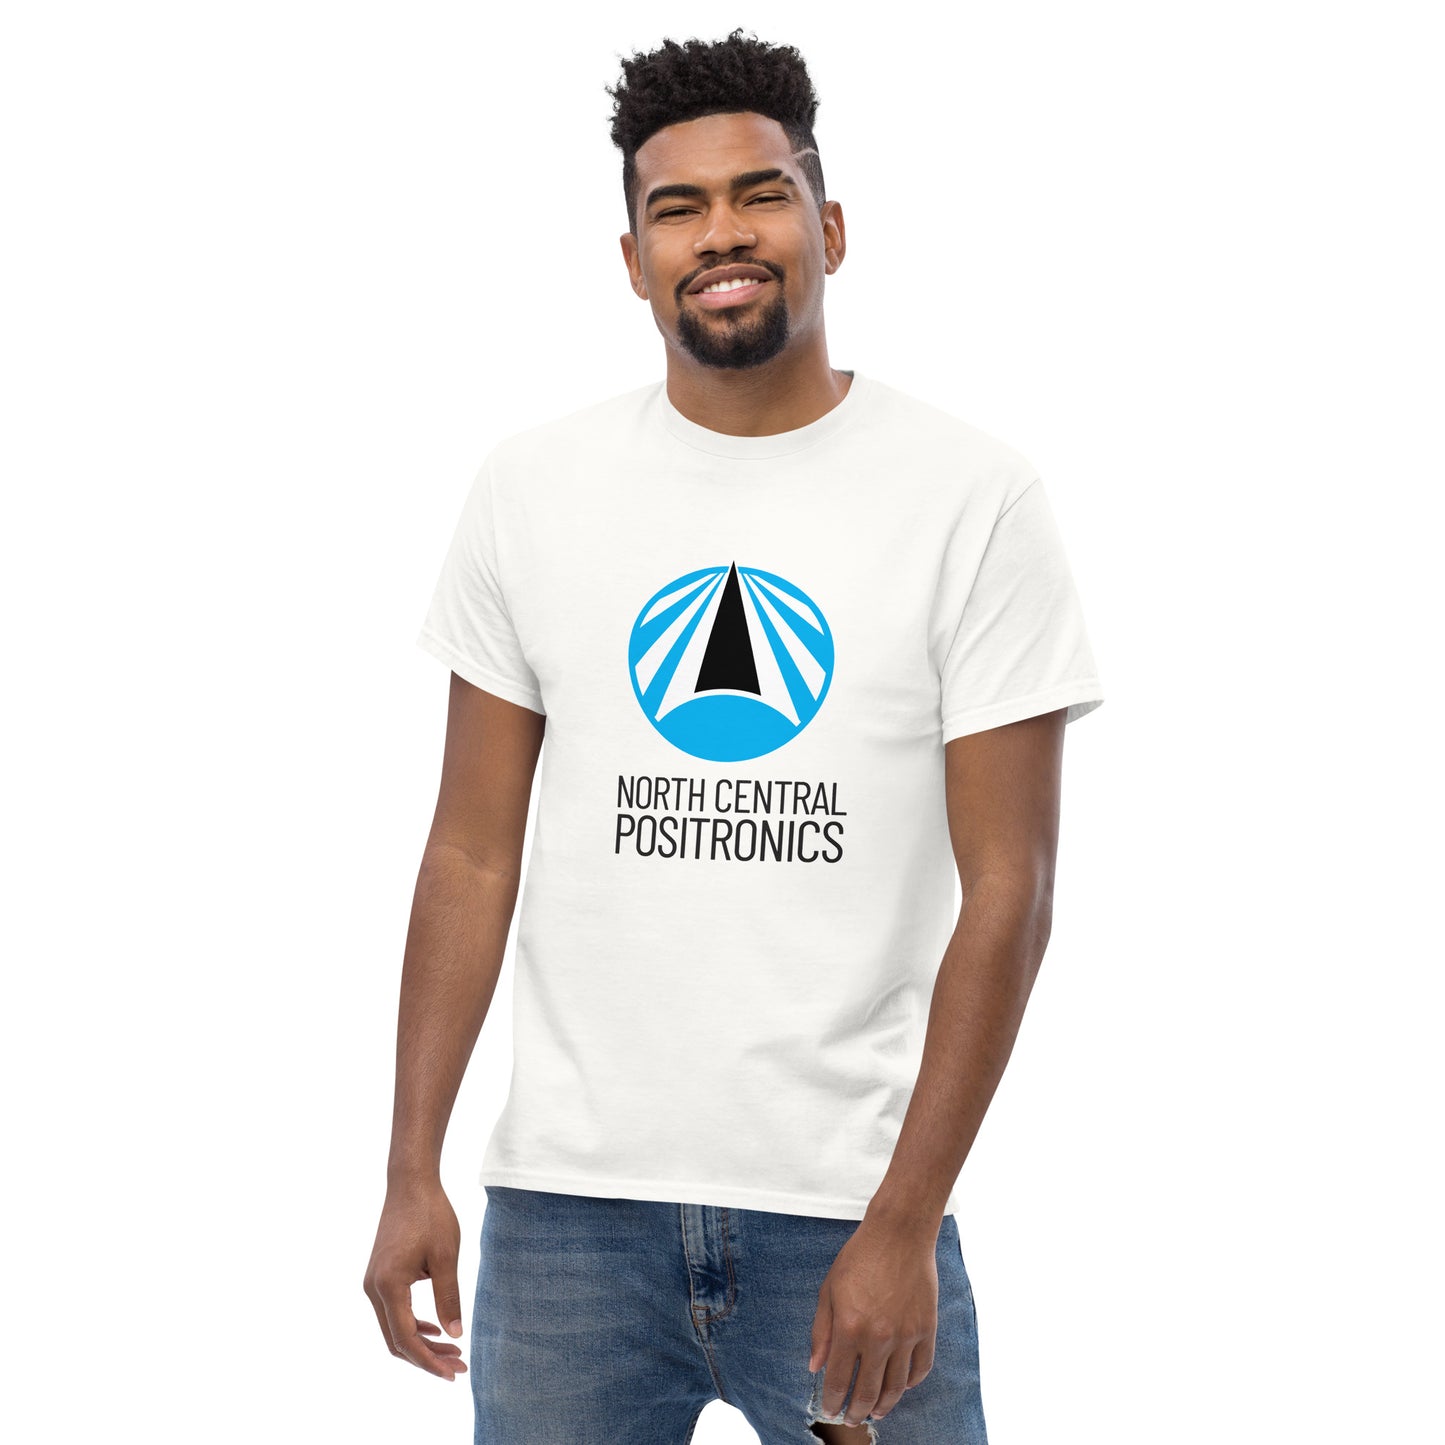 North Central Positronics T-Shirt, Black Logo, Classic Fit